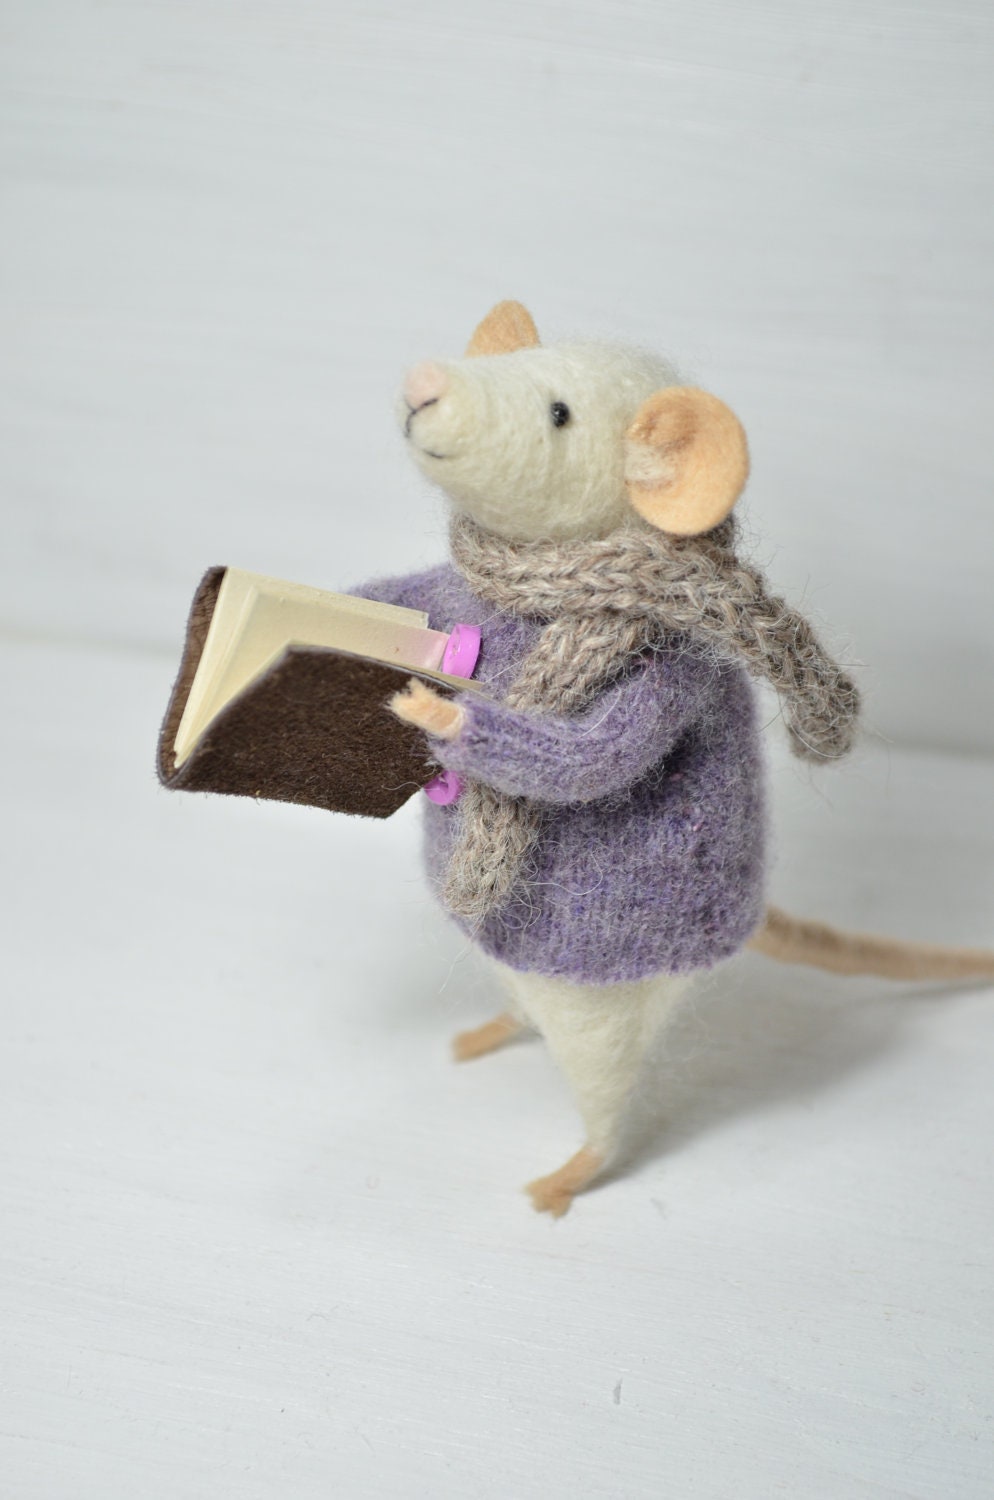 Little Reader Mouse - unique - needle felted ornament animal, felting dreams by johana molina